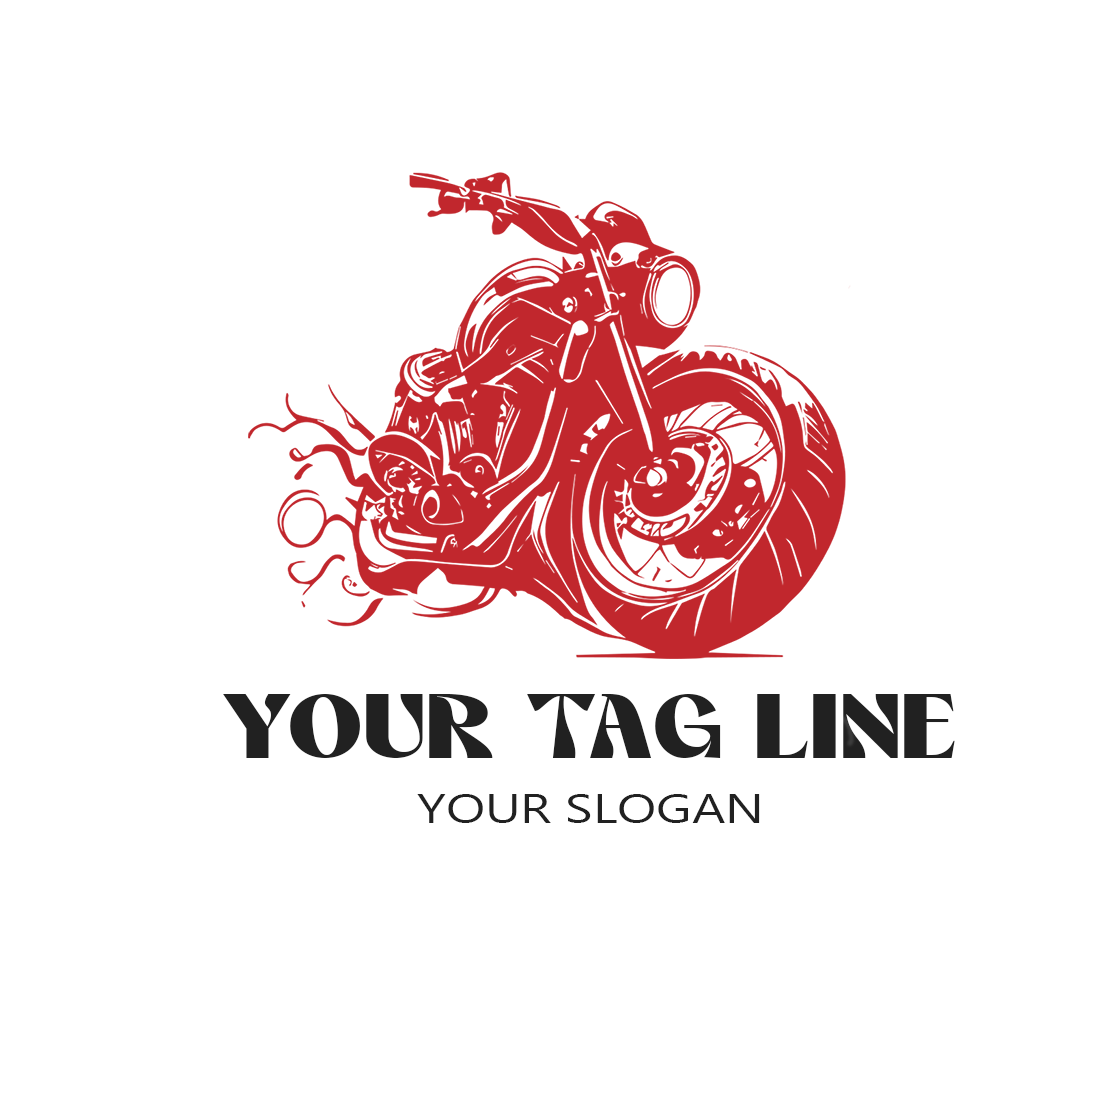 motorbike logo design